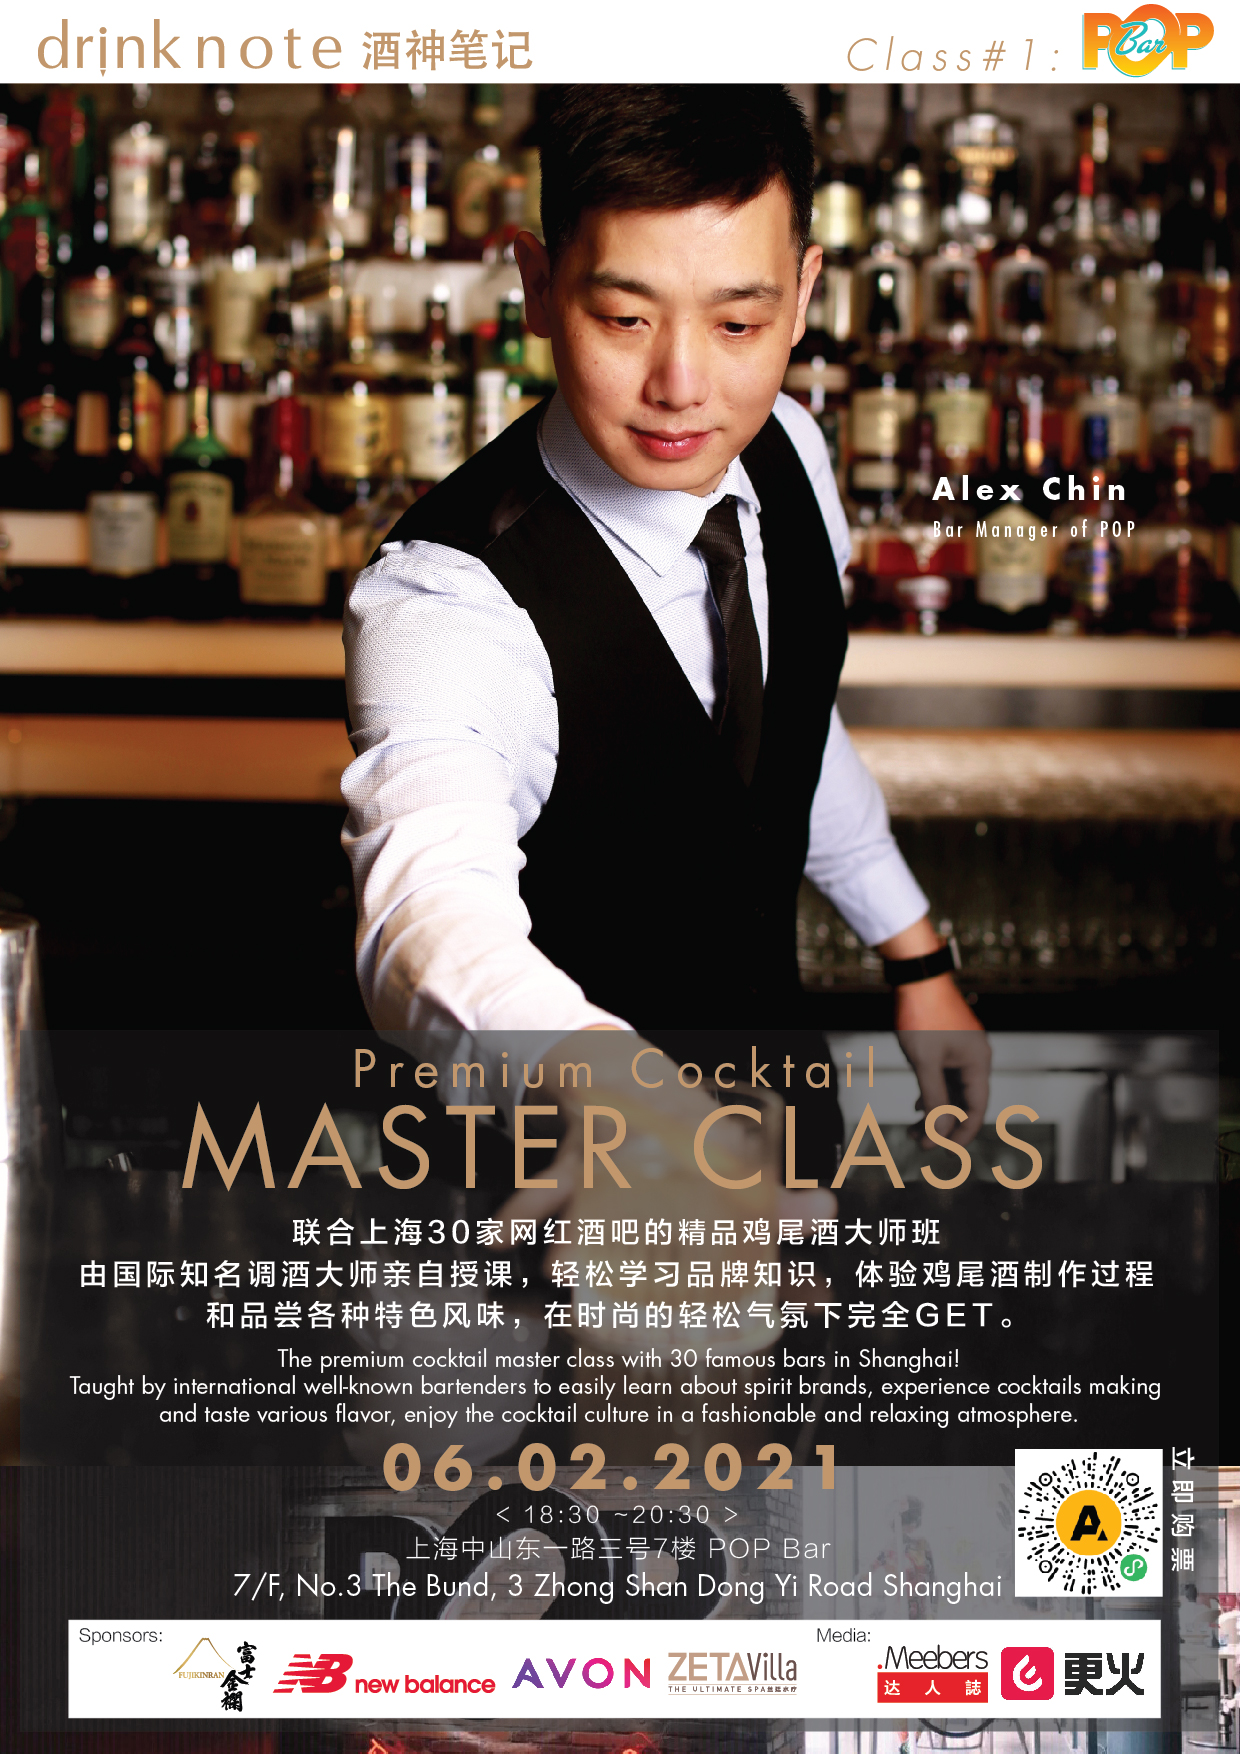 Premium Cocktail Master Class | Shanghai Events